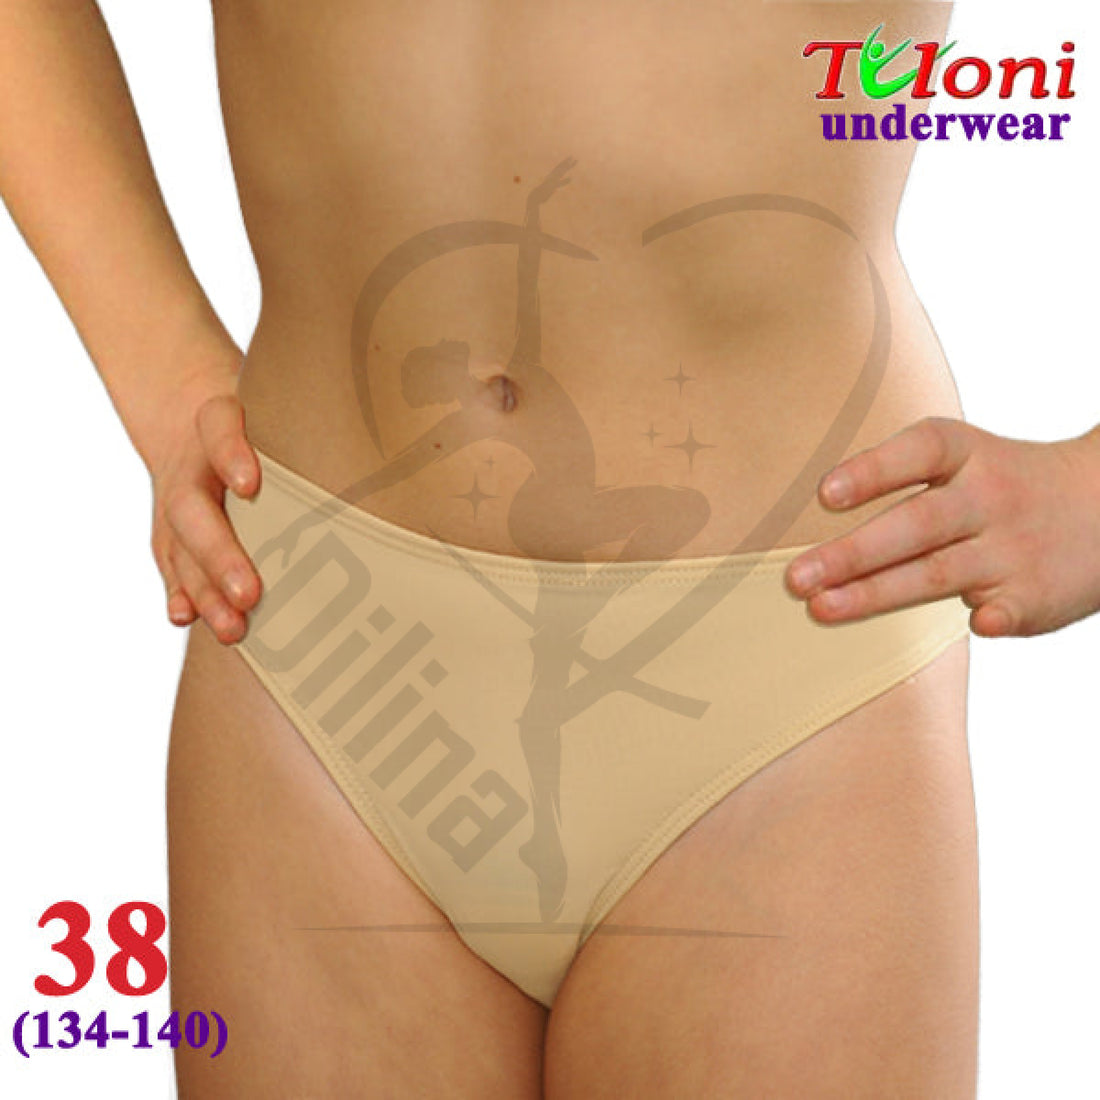 Tuloni Underpants 38 (134-140) Underwear